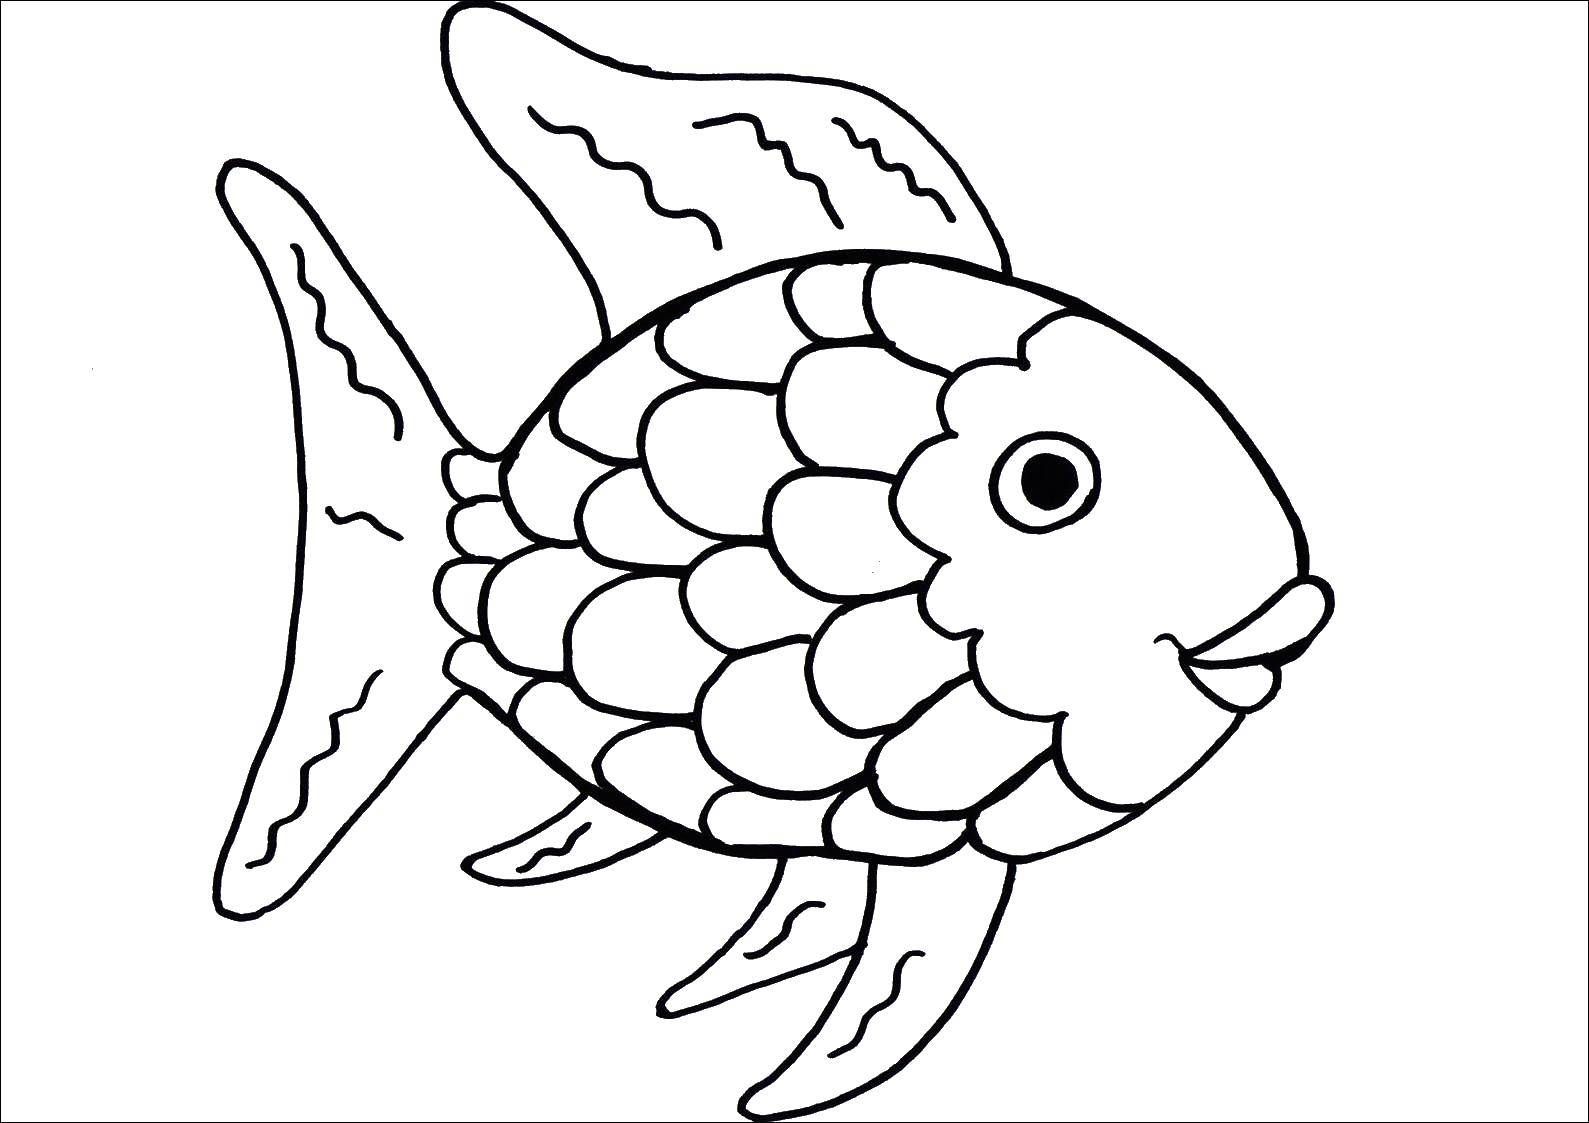 Coloring Goldfish. Category fish. Tags:  gold fish , fish scales.